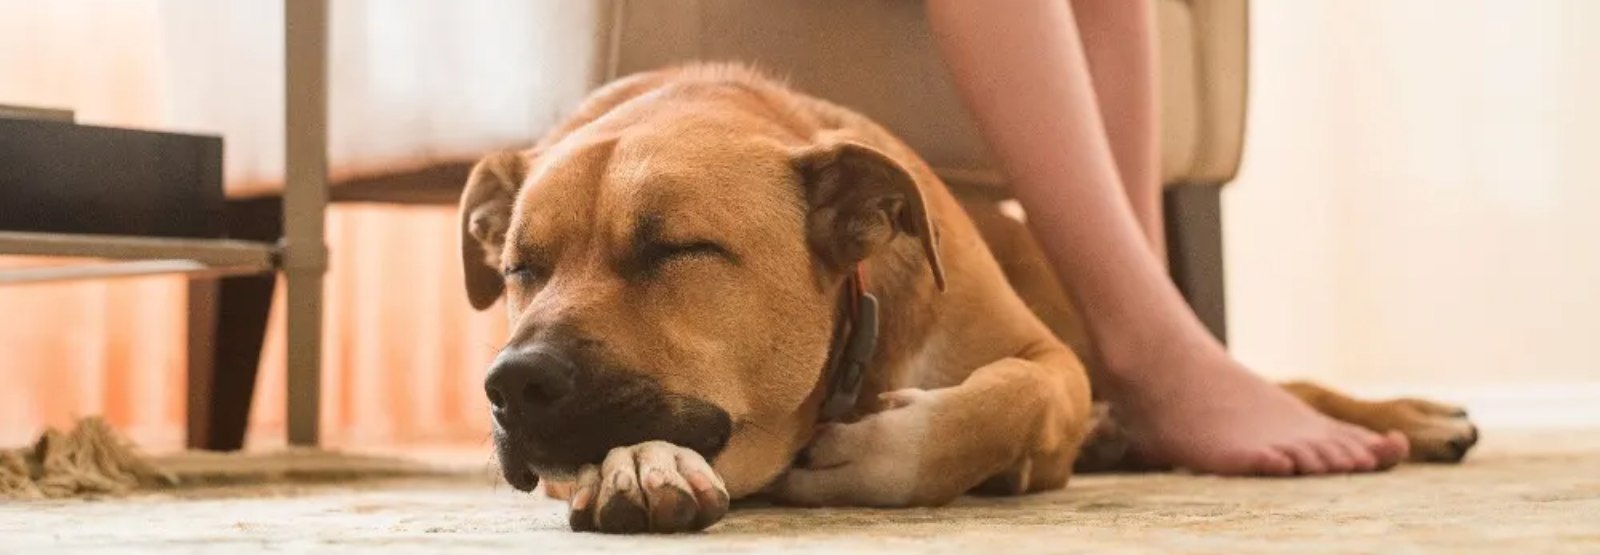 a dog sleeping next to a a person's feet